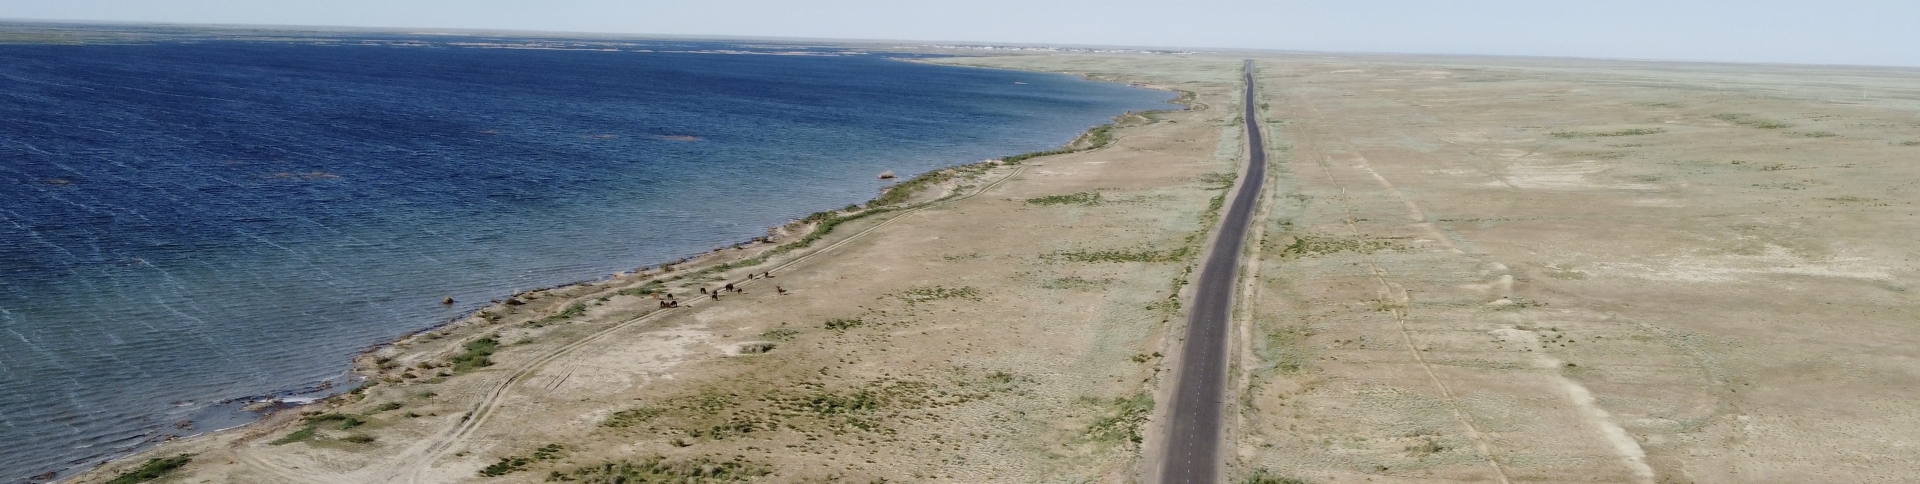 A road along the Aral Sea